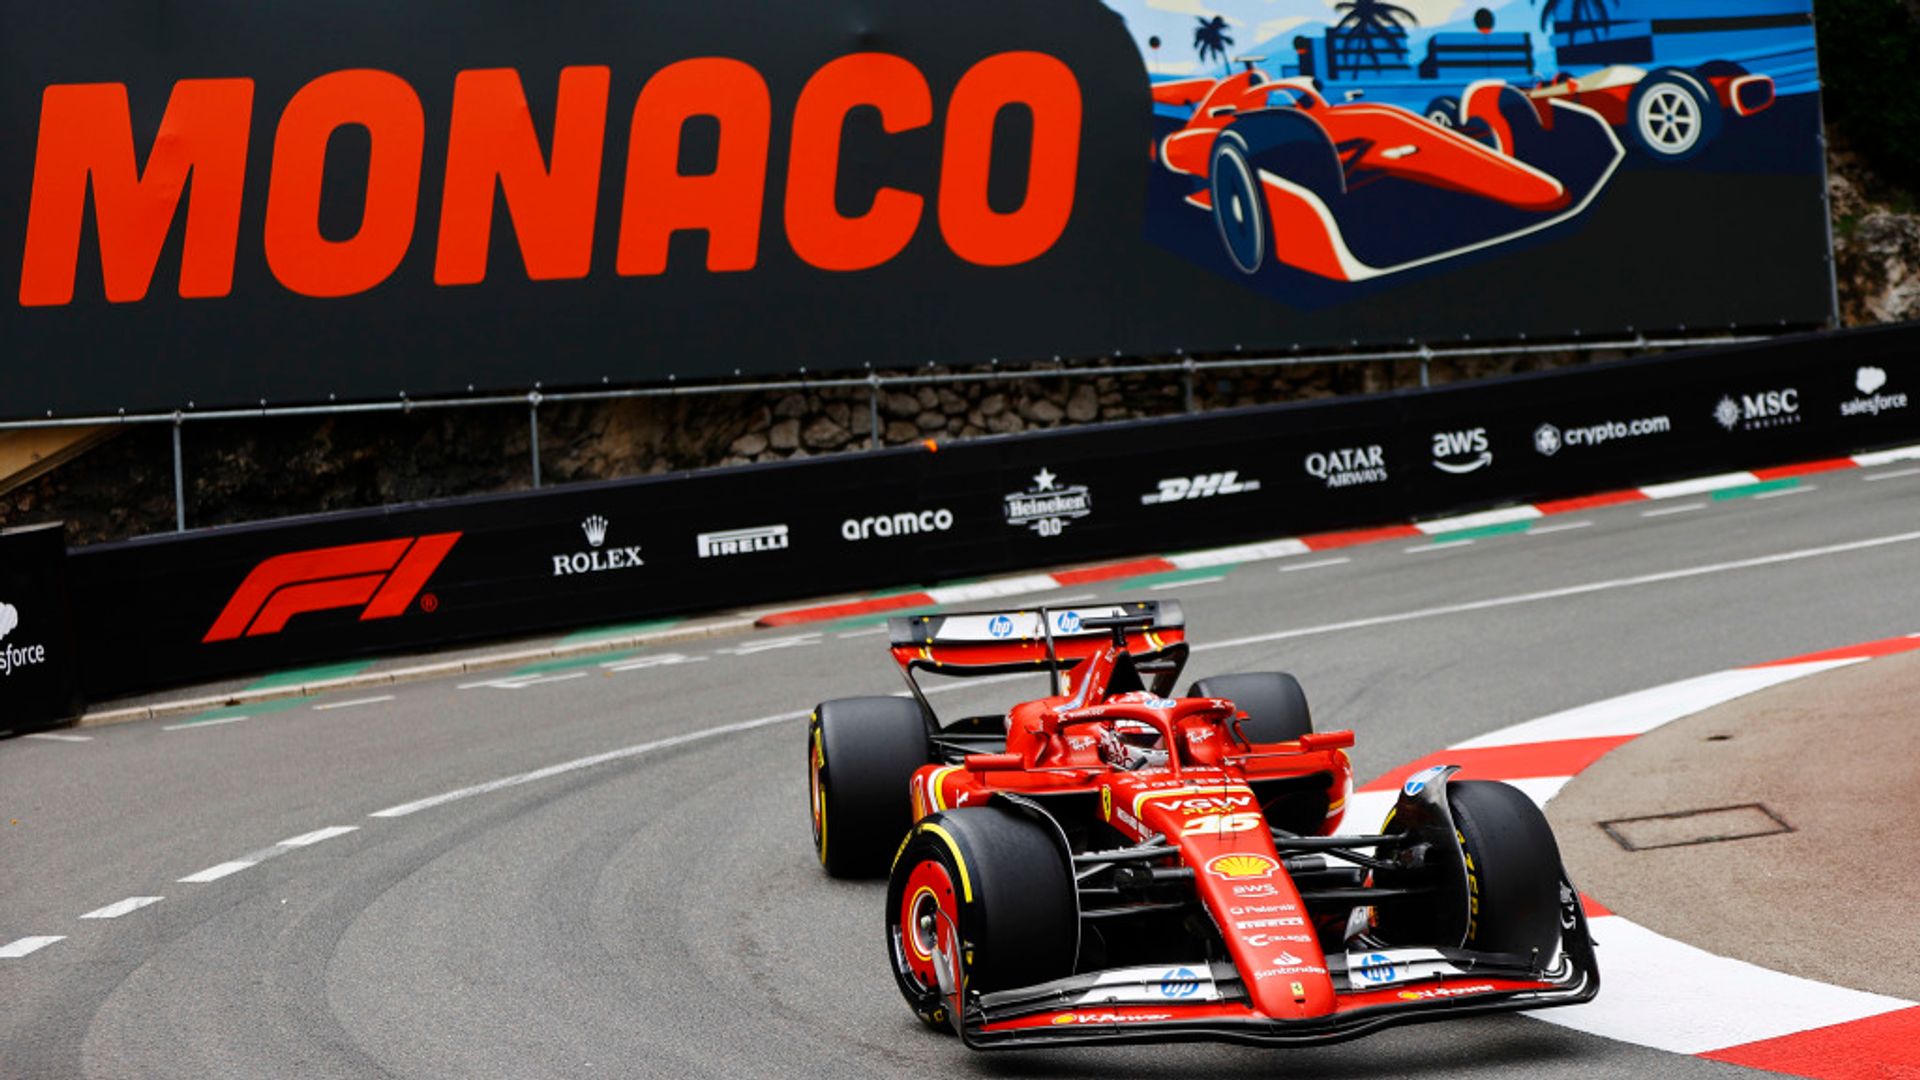 Monaco GP: Leclerc fastest as Hamilton impresses - recap